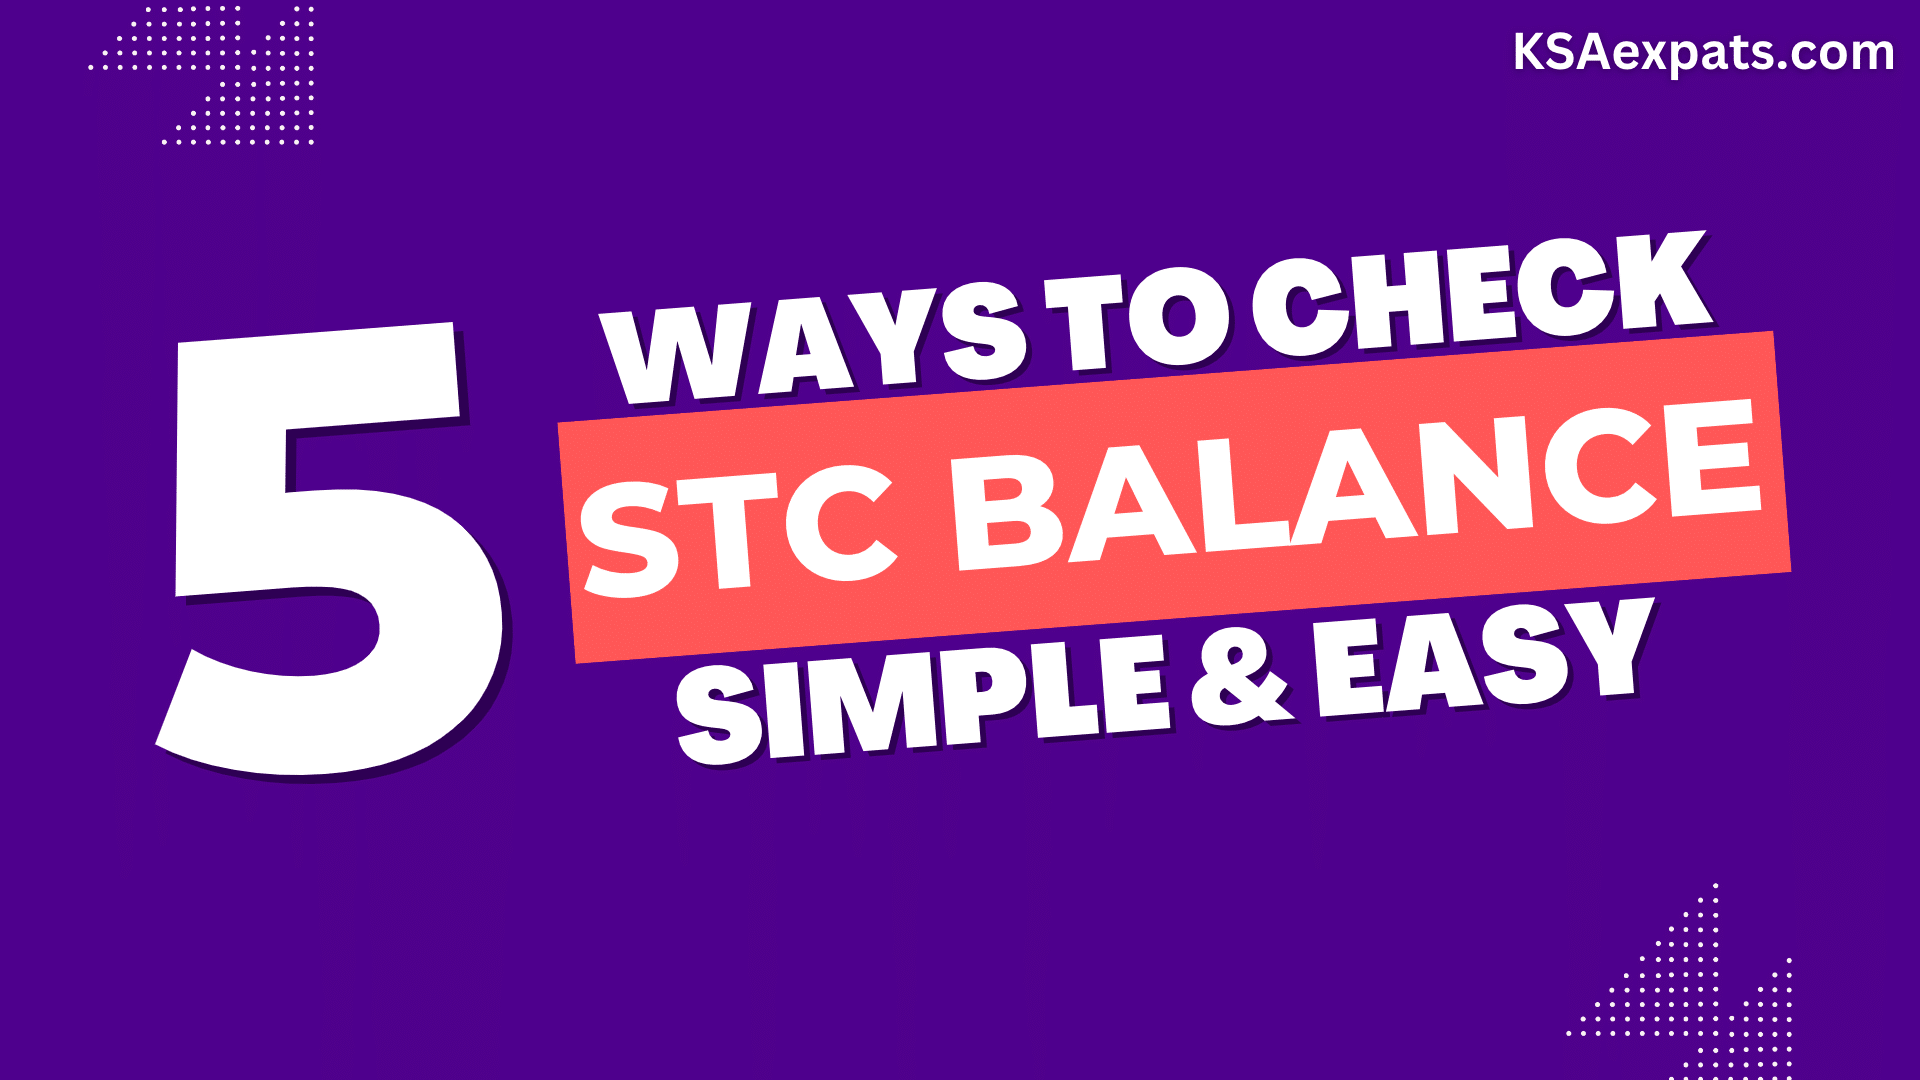 HOW TO CHECK STC BALANCE